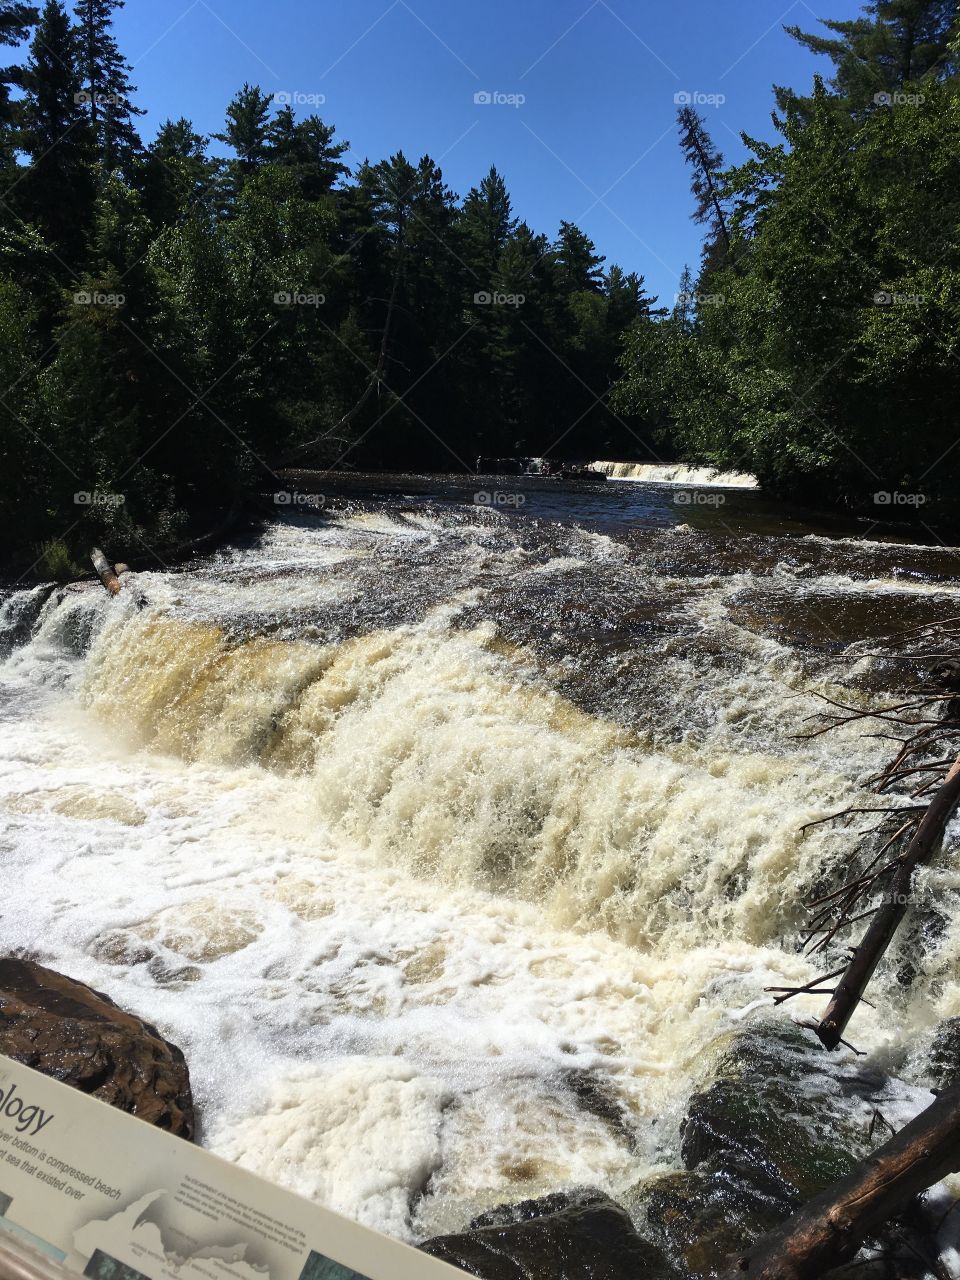 Michigan water falls